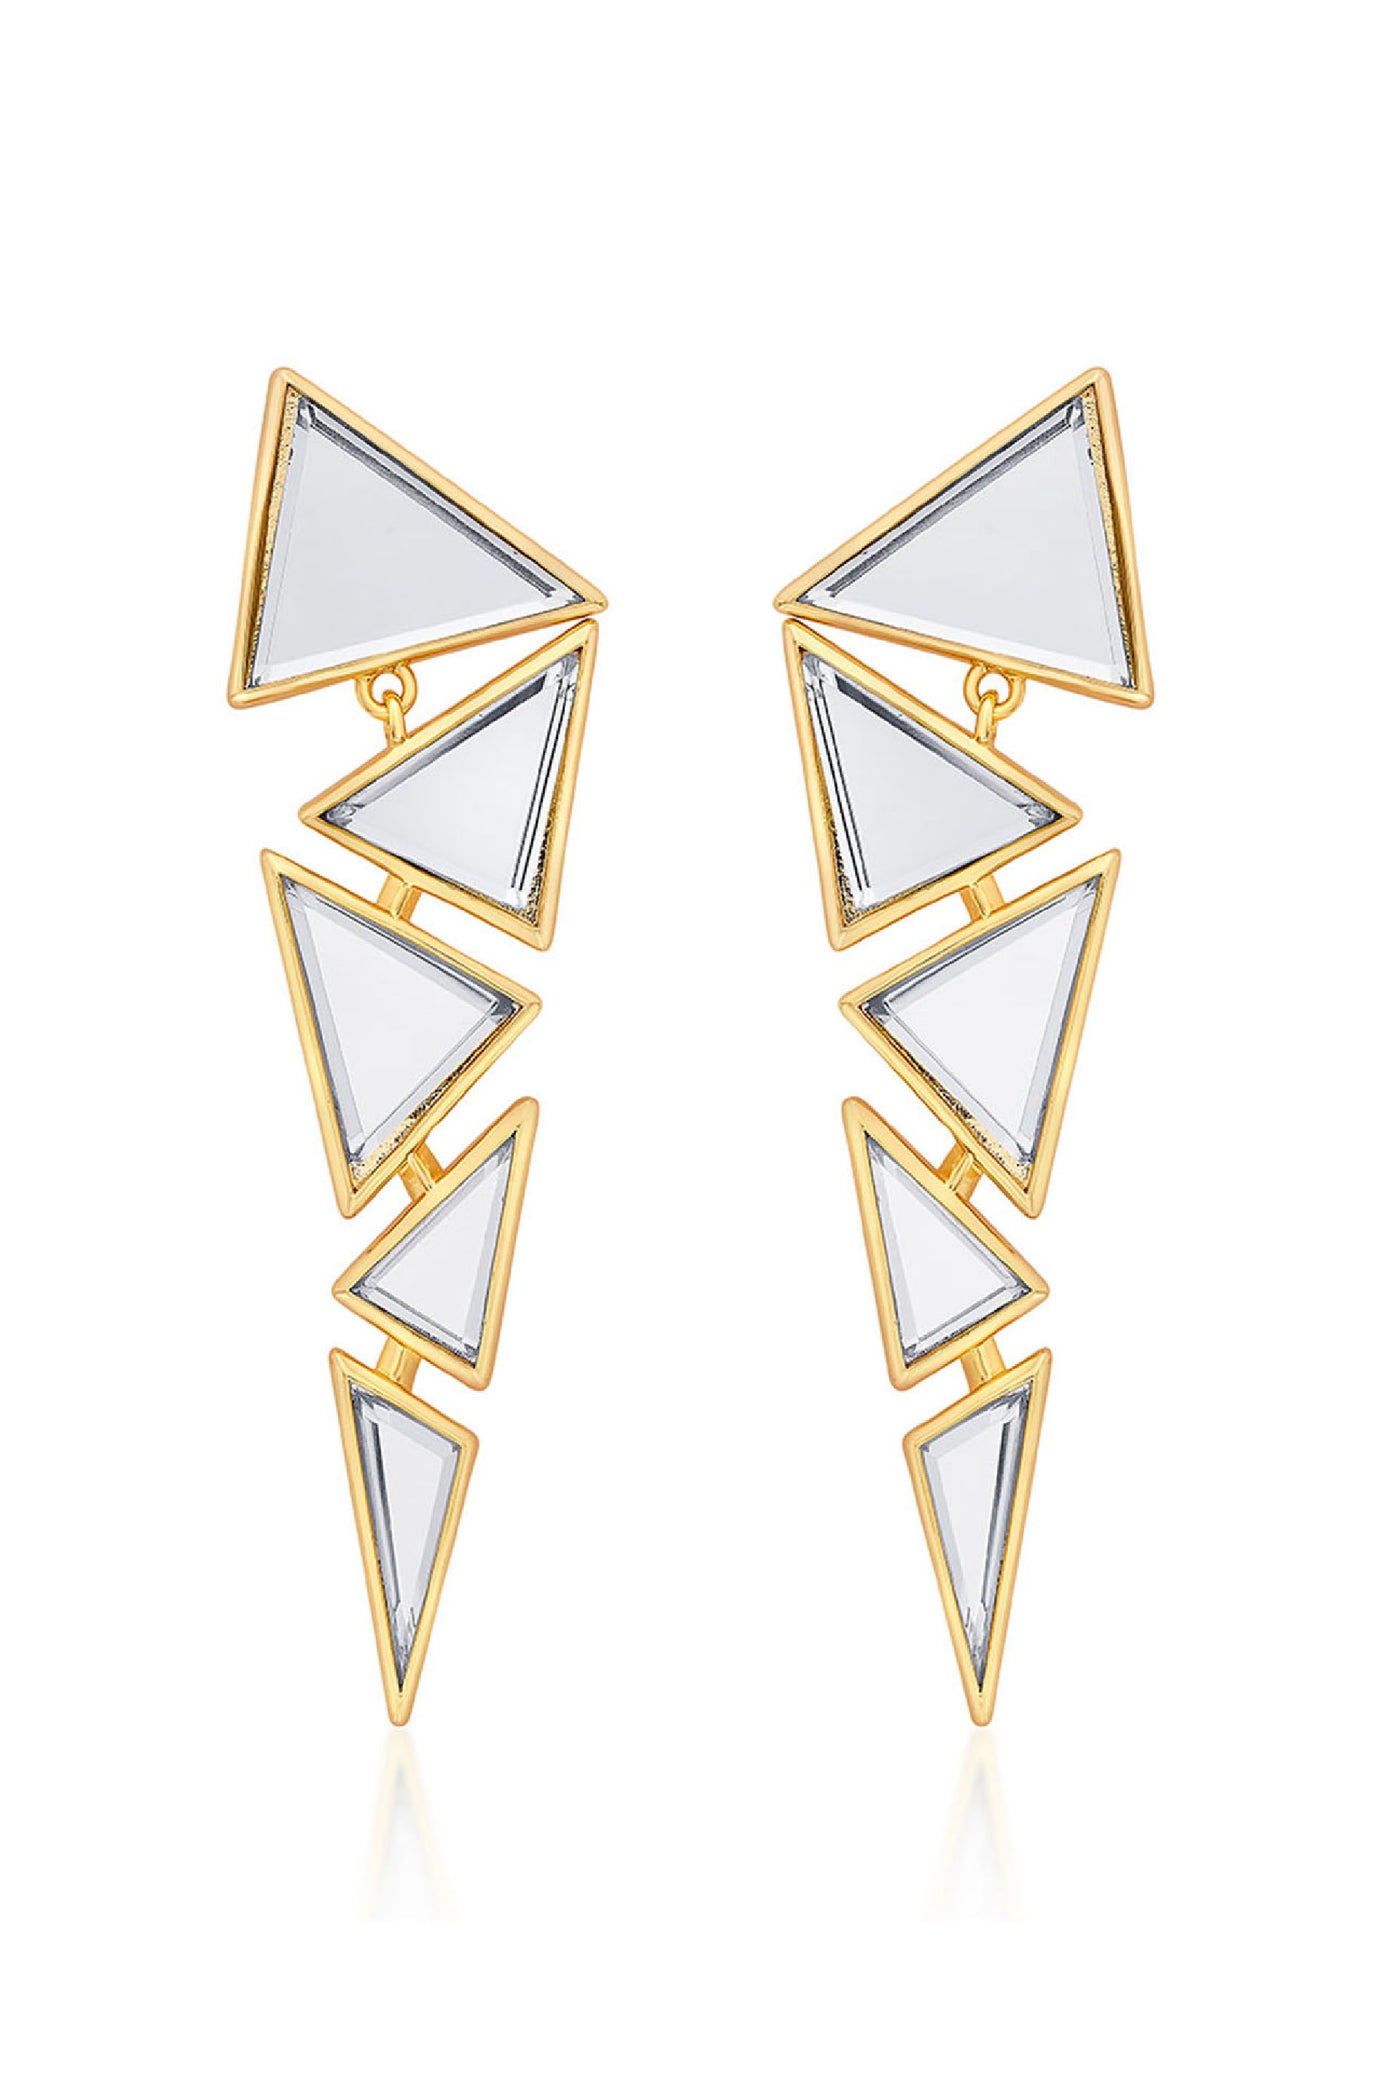 Isharya Dazzle Mirror Triangle Earrings jewellery indian designer wear online shopping melange singapore